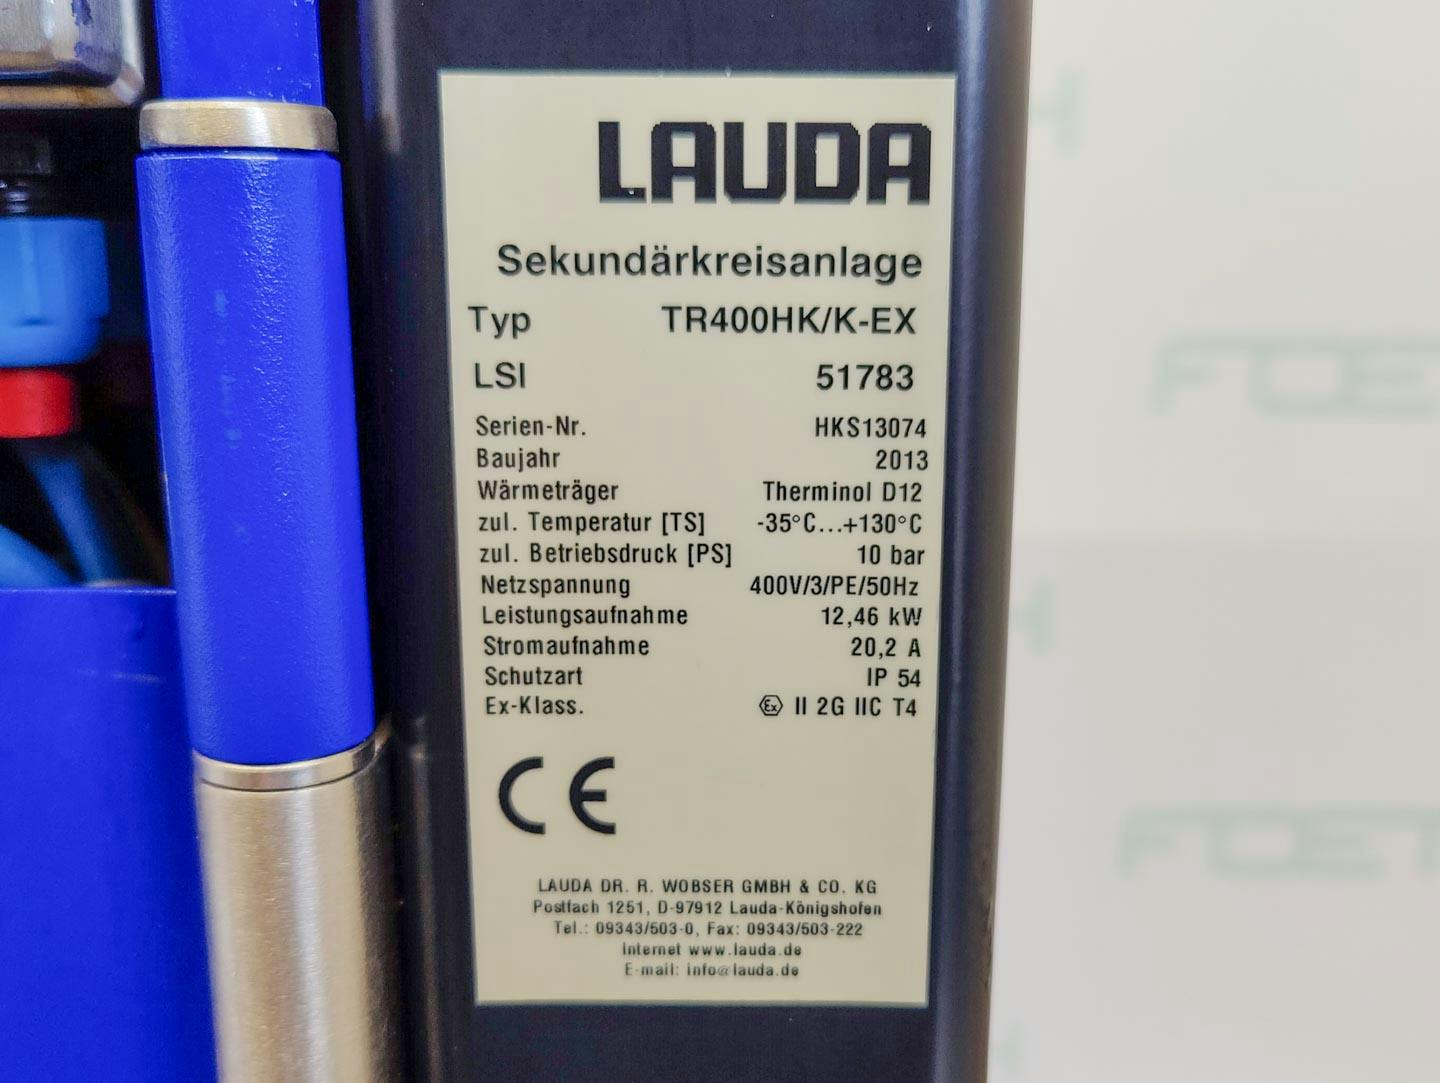 Lauda TR400 HK/KT-EX "secondary circuit system" - Chladic recirkulacní - image 16